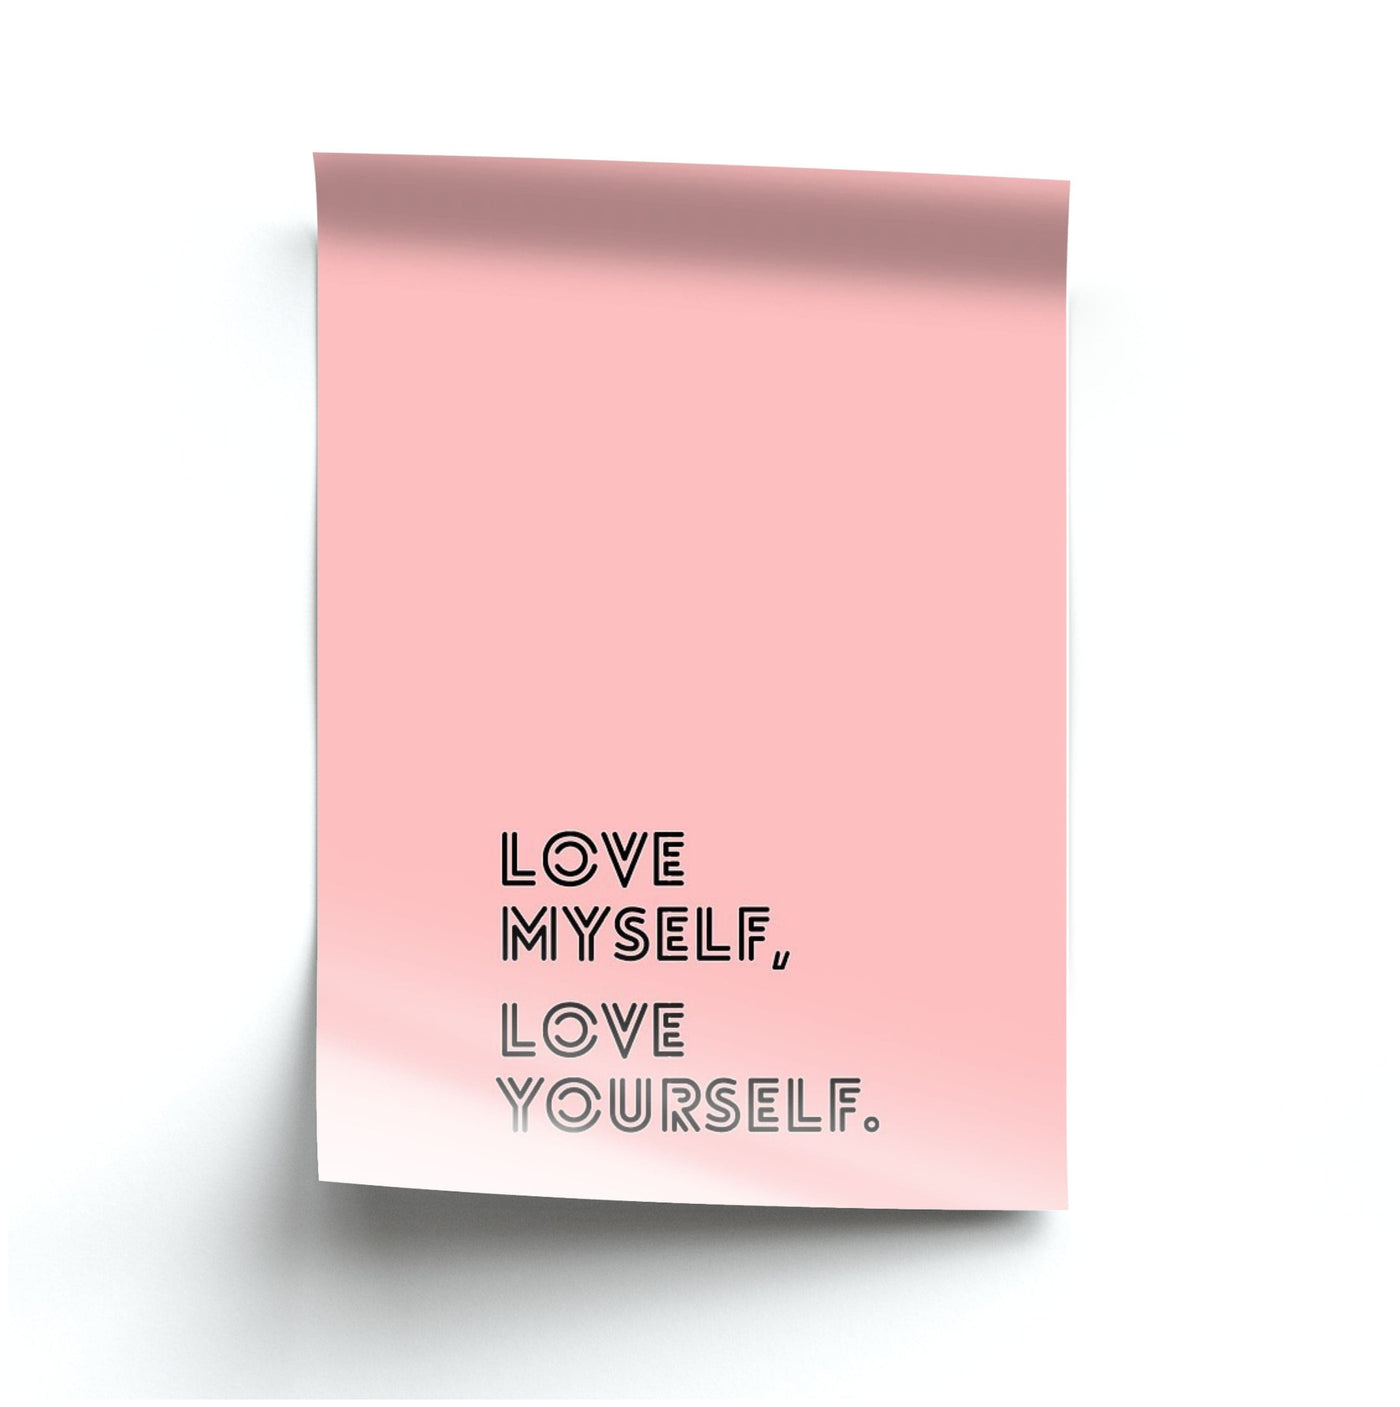 Love Myself, Love Yourself BTS Poster